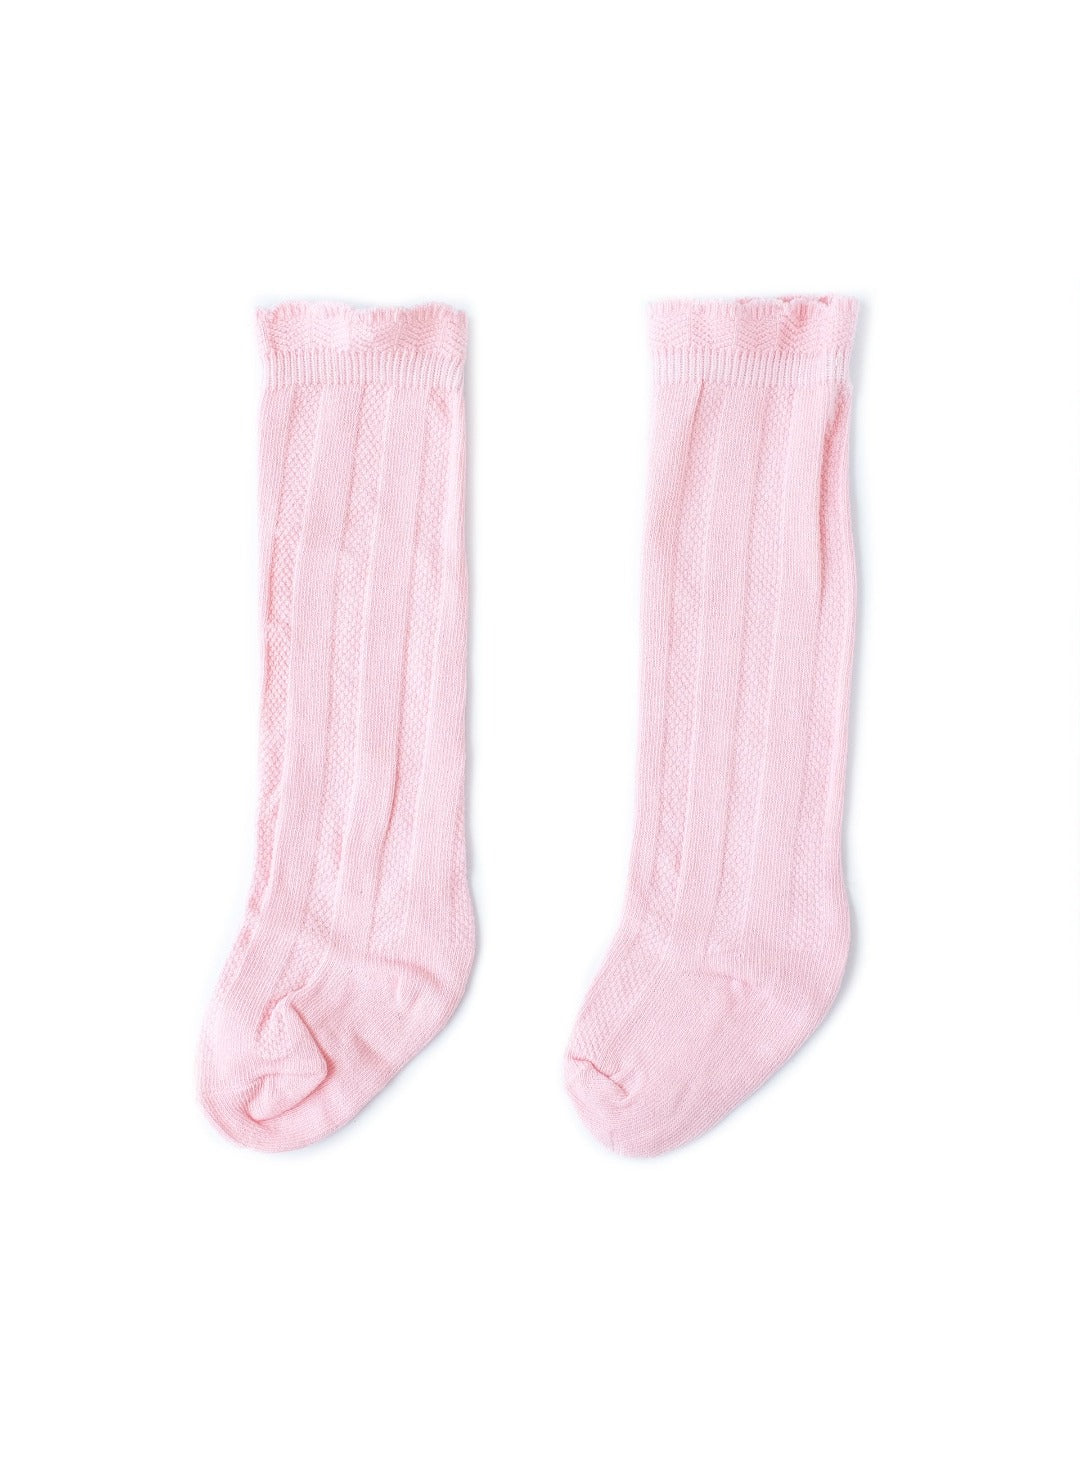 short pink cotton candy colour socks